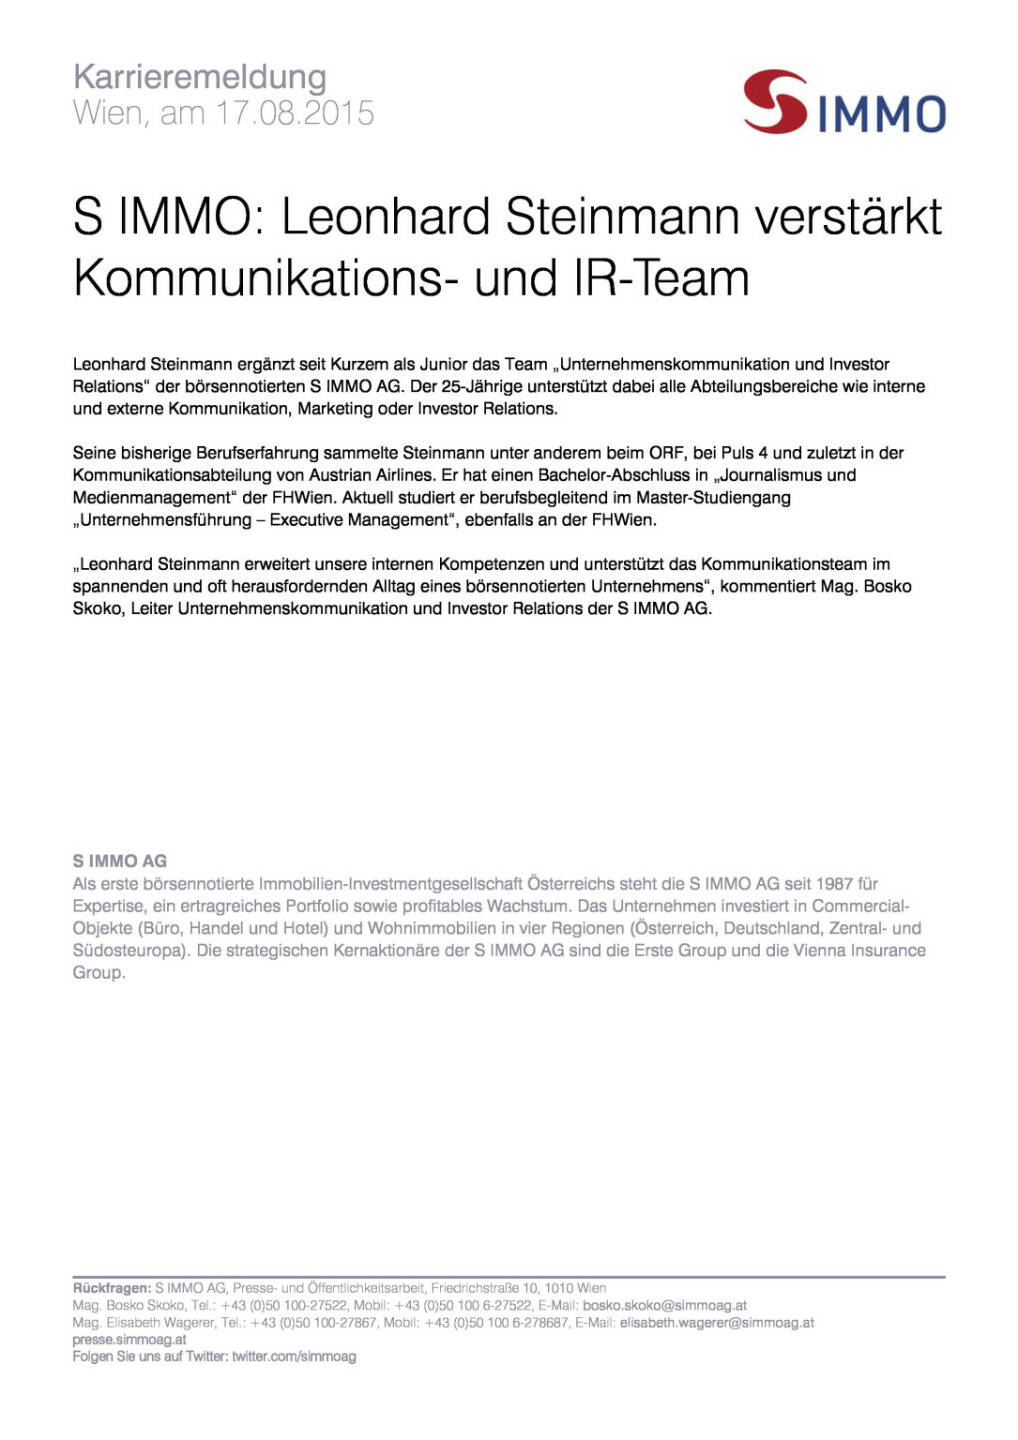 S Immo: Leonhard Steinmann verstärkt Kommunikations- und IR-Team, Seite 1/1, komplettes Dokument unter http://boerse-social.com/static/uploads/file_290_s_immo_leonhard_steinmann_verstarkt_kommunikations-_und_ir-team.pdf